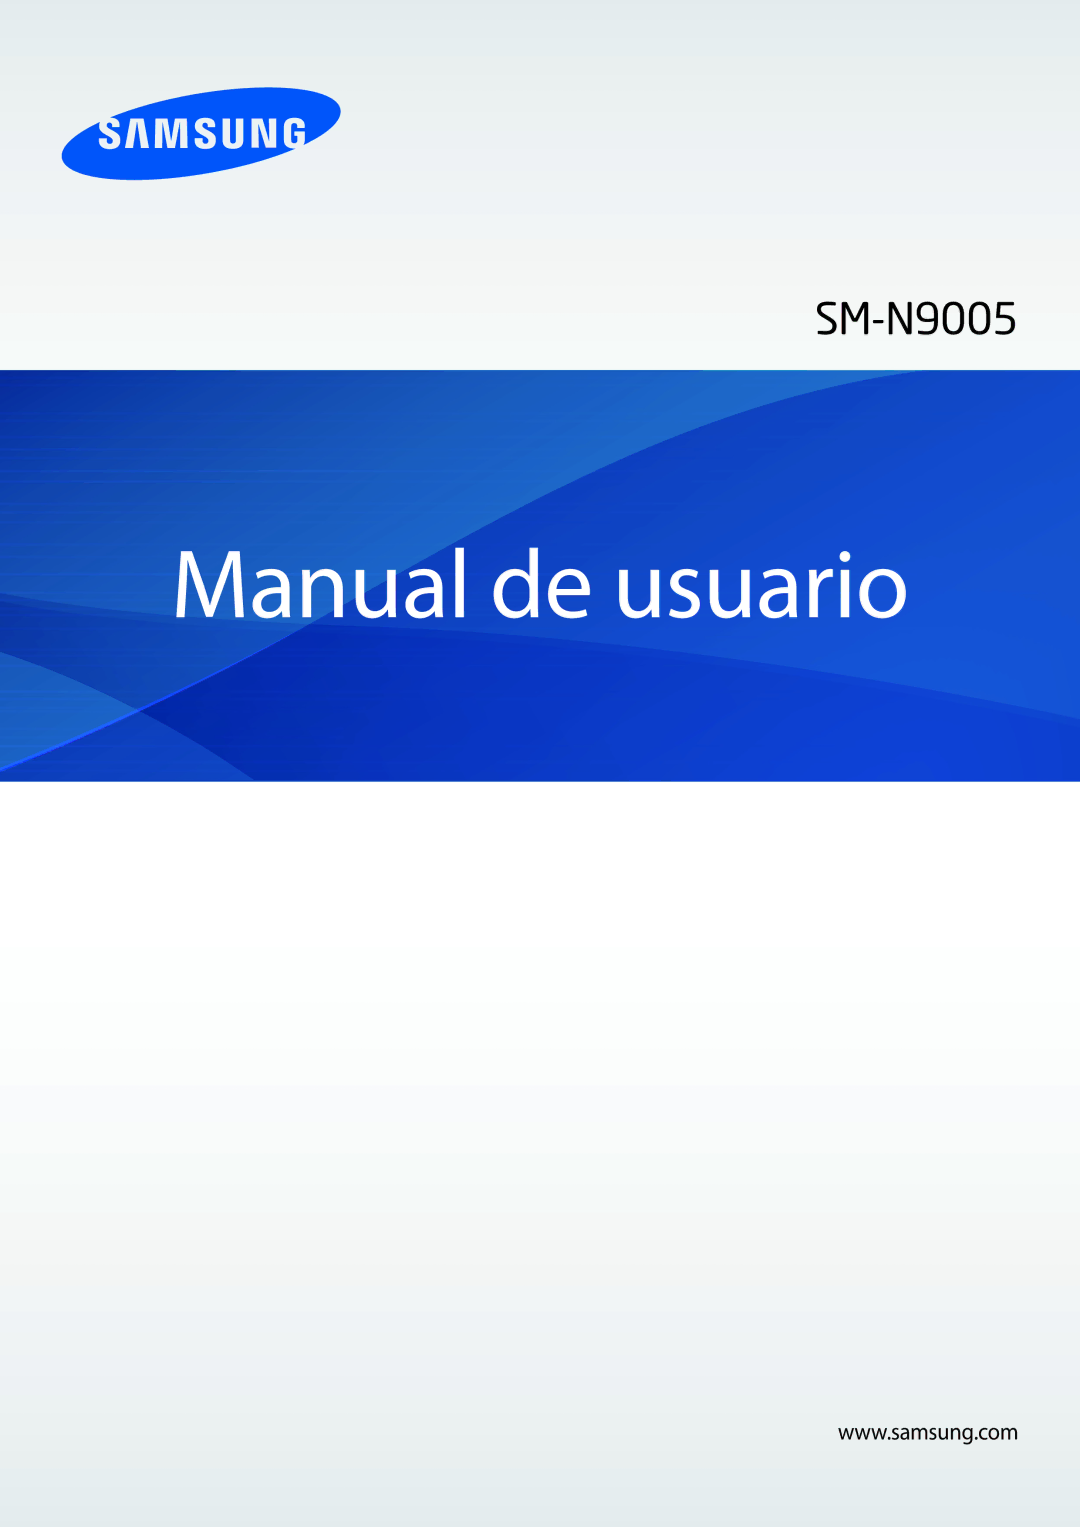 Samsung SM-N9005ZWEDBT, SM-N9005ZWEITV, SM-N9005ZKEEUR, SM-N9005ZKETPH, SM-N9005ZWESEB manual Manual de usuario 